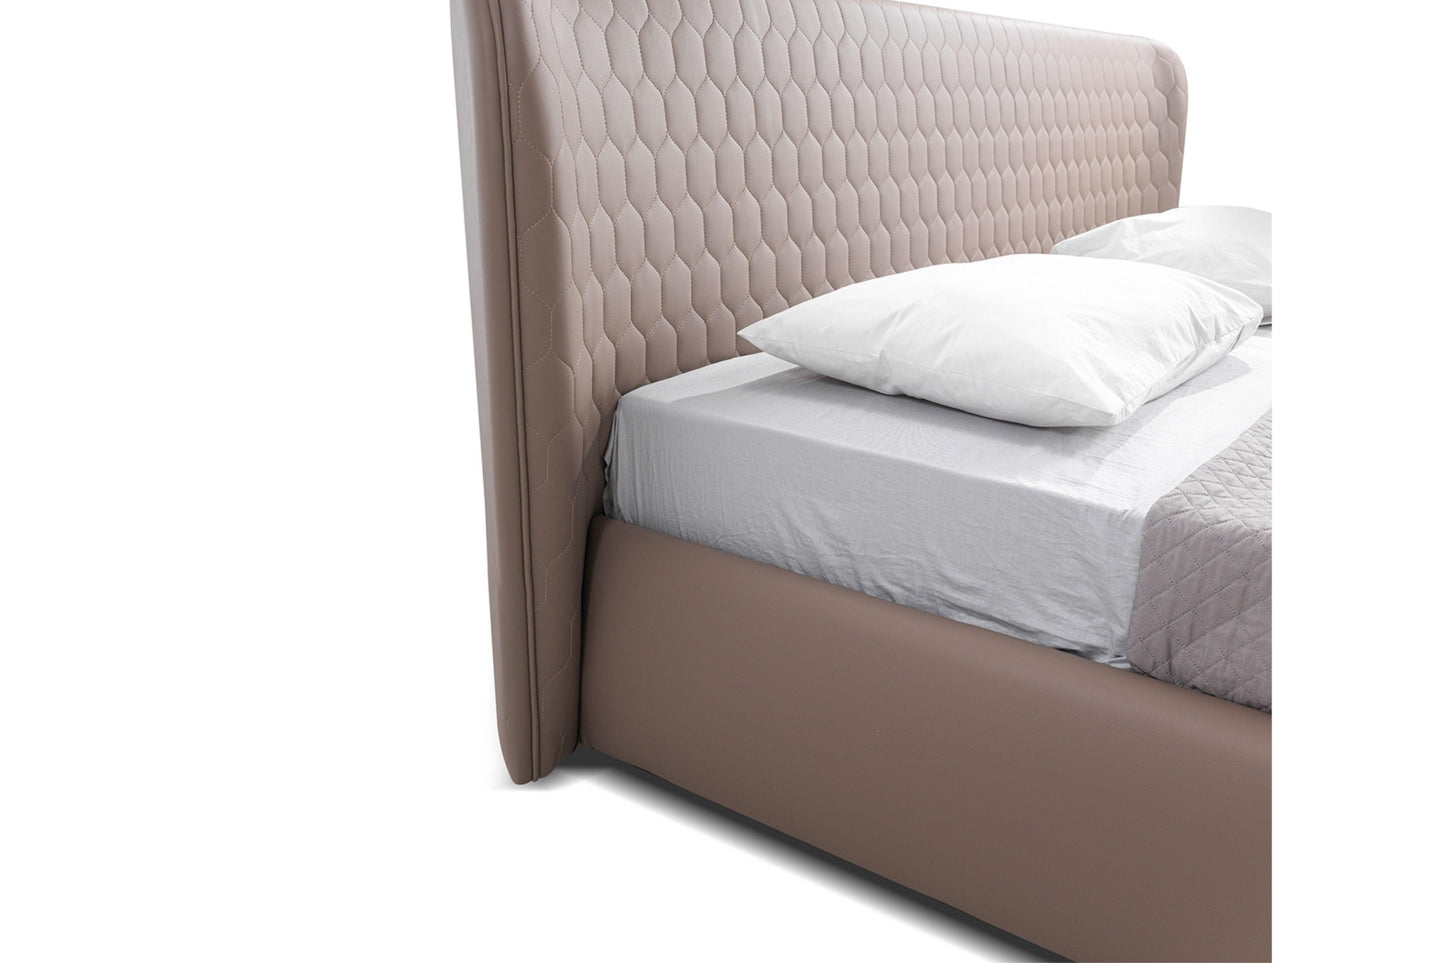 Agoura King and Queen Bed Model CB-A101QTA/CB-A101KTA - Venini Furniture 